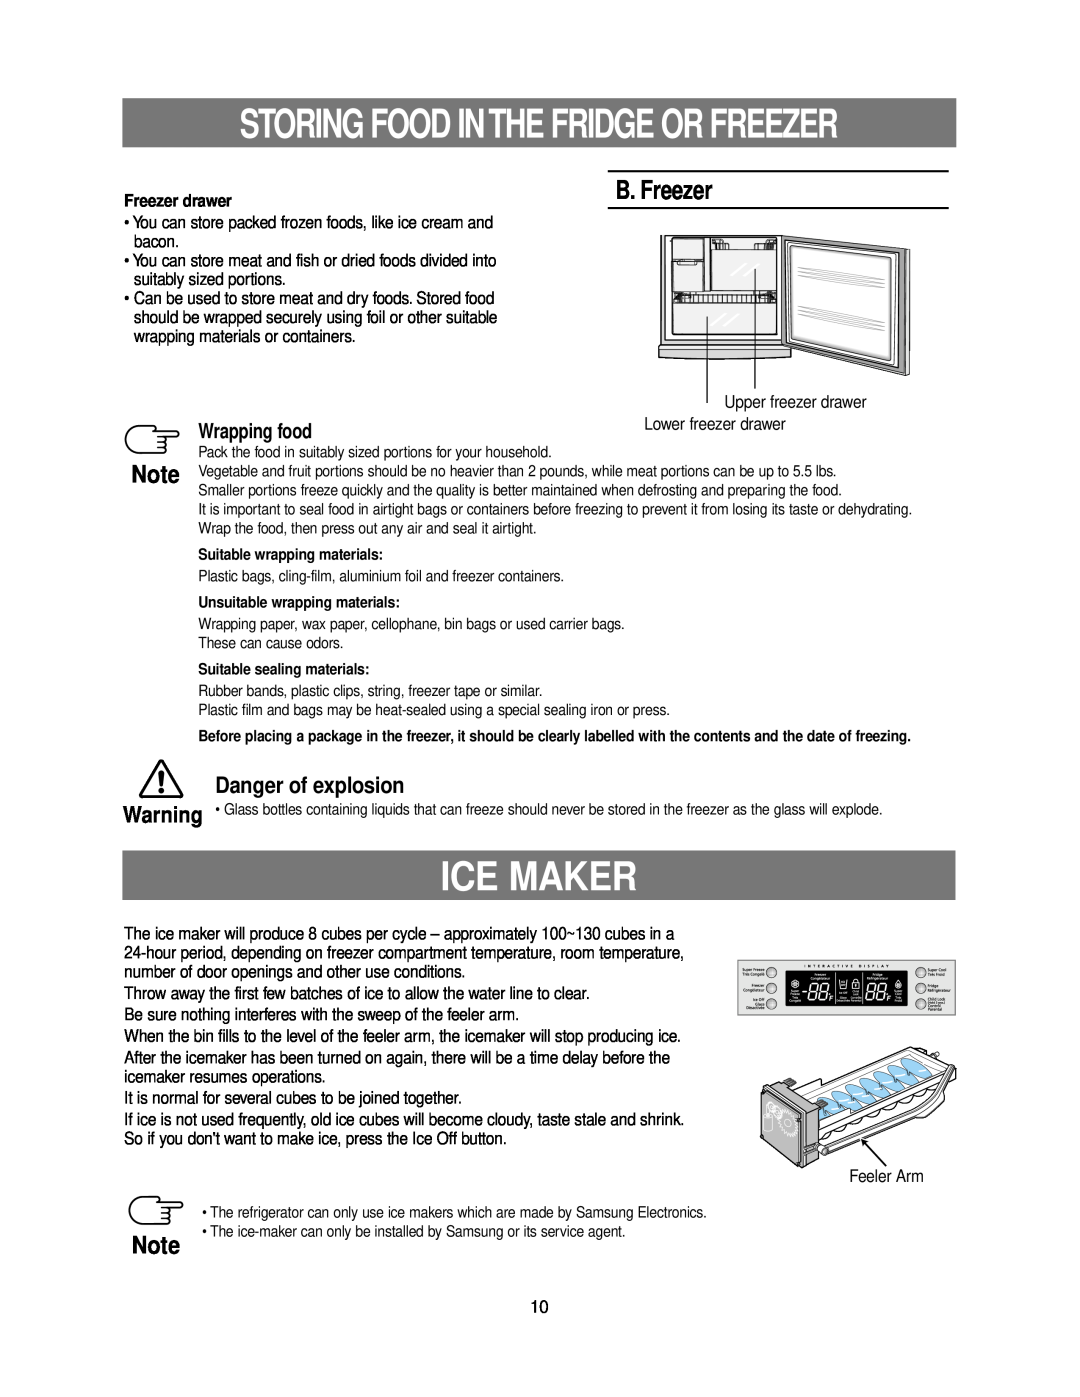 Samsung RB215ZA**, RB195ZA** owner manual Ice Maker, B. Freezer, Danger of explosion, Wrapping food, Freezer drawer 